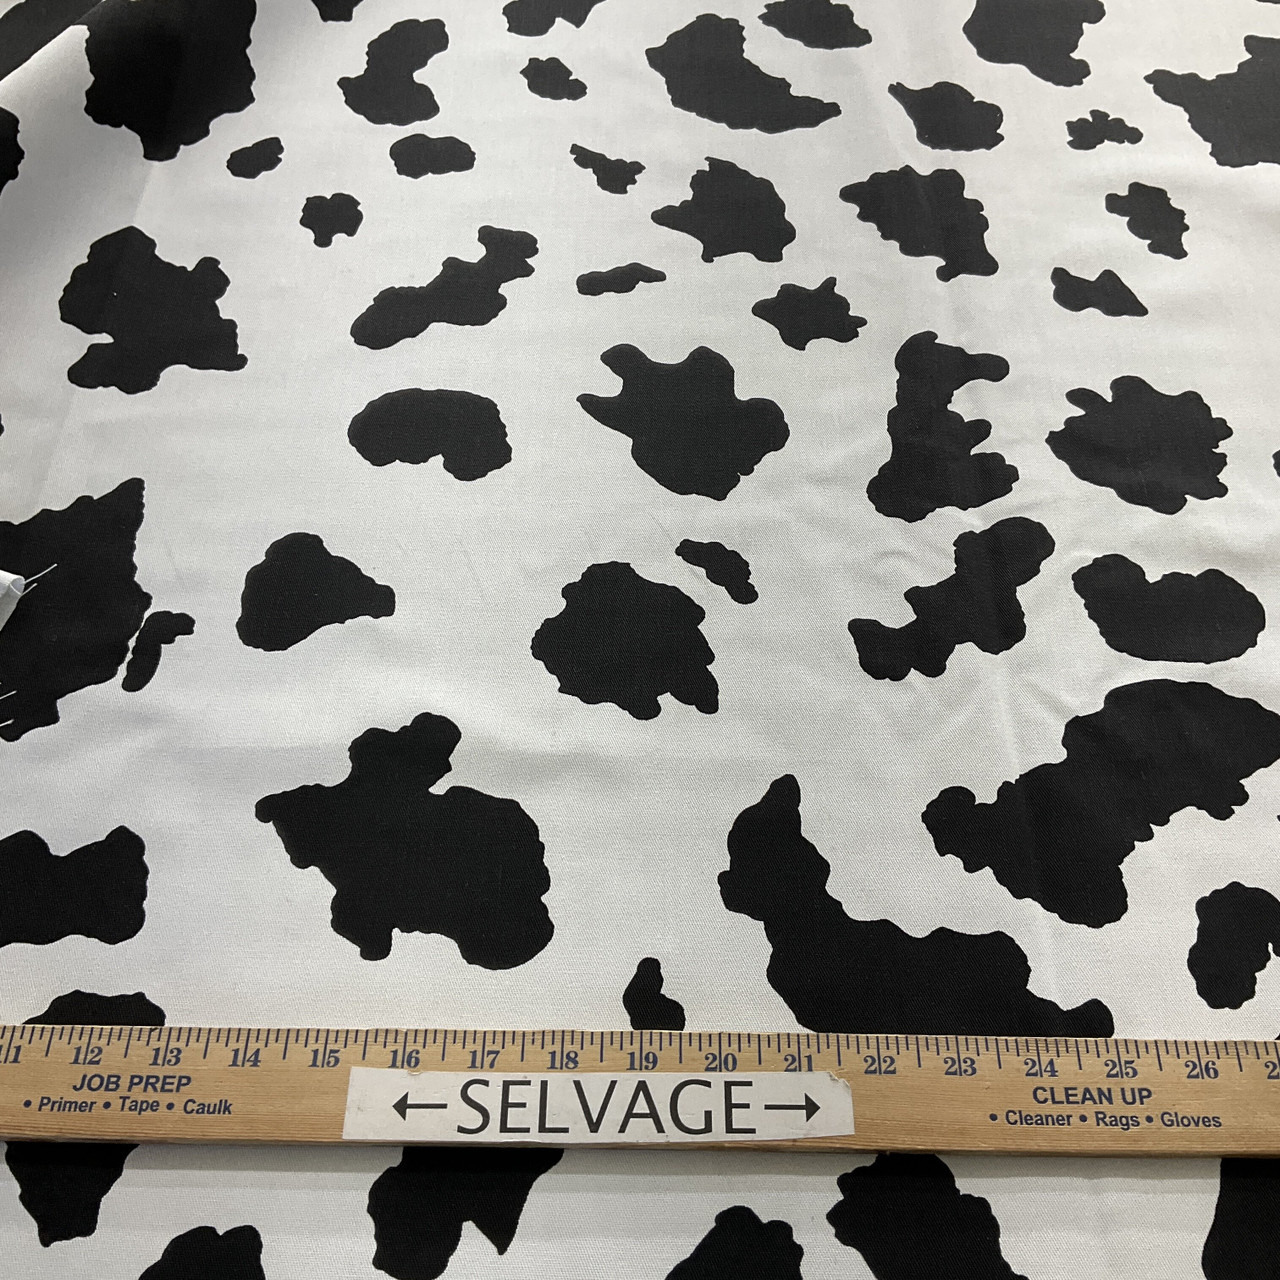 Poly/Cotton Twill Cow Print Black/White, Medium Weight Twill Fabric, Home  Decor Fabric